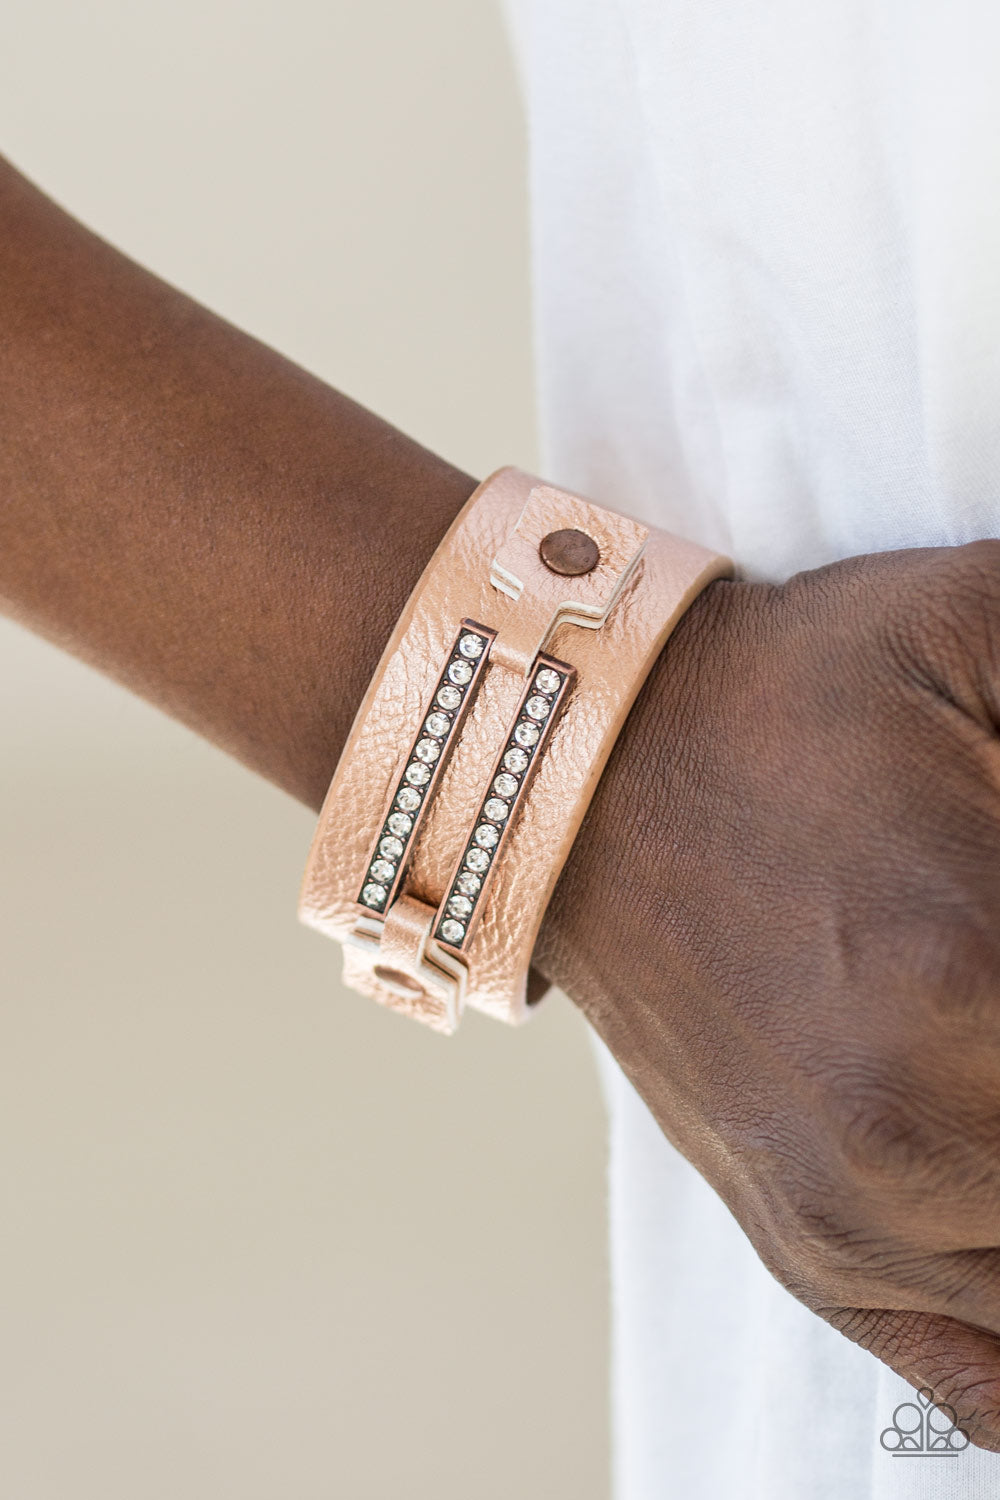 Street Glam - Copper wrap bracelet